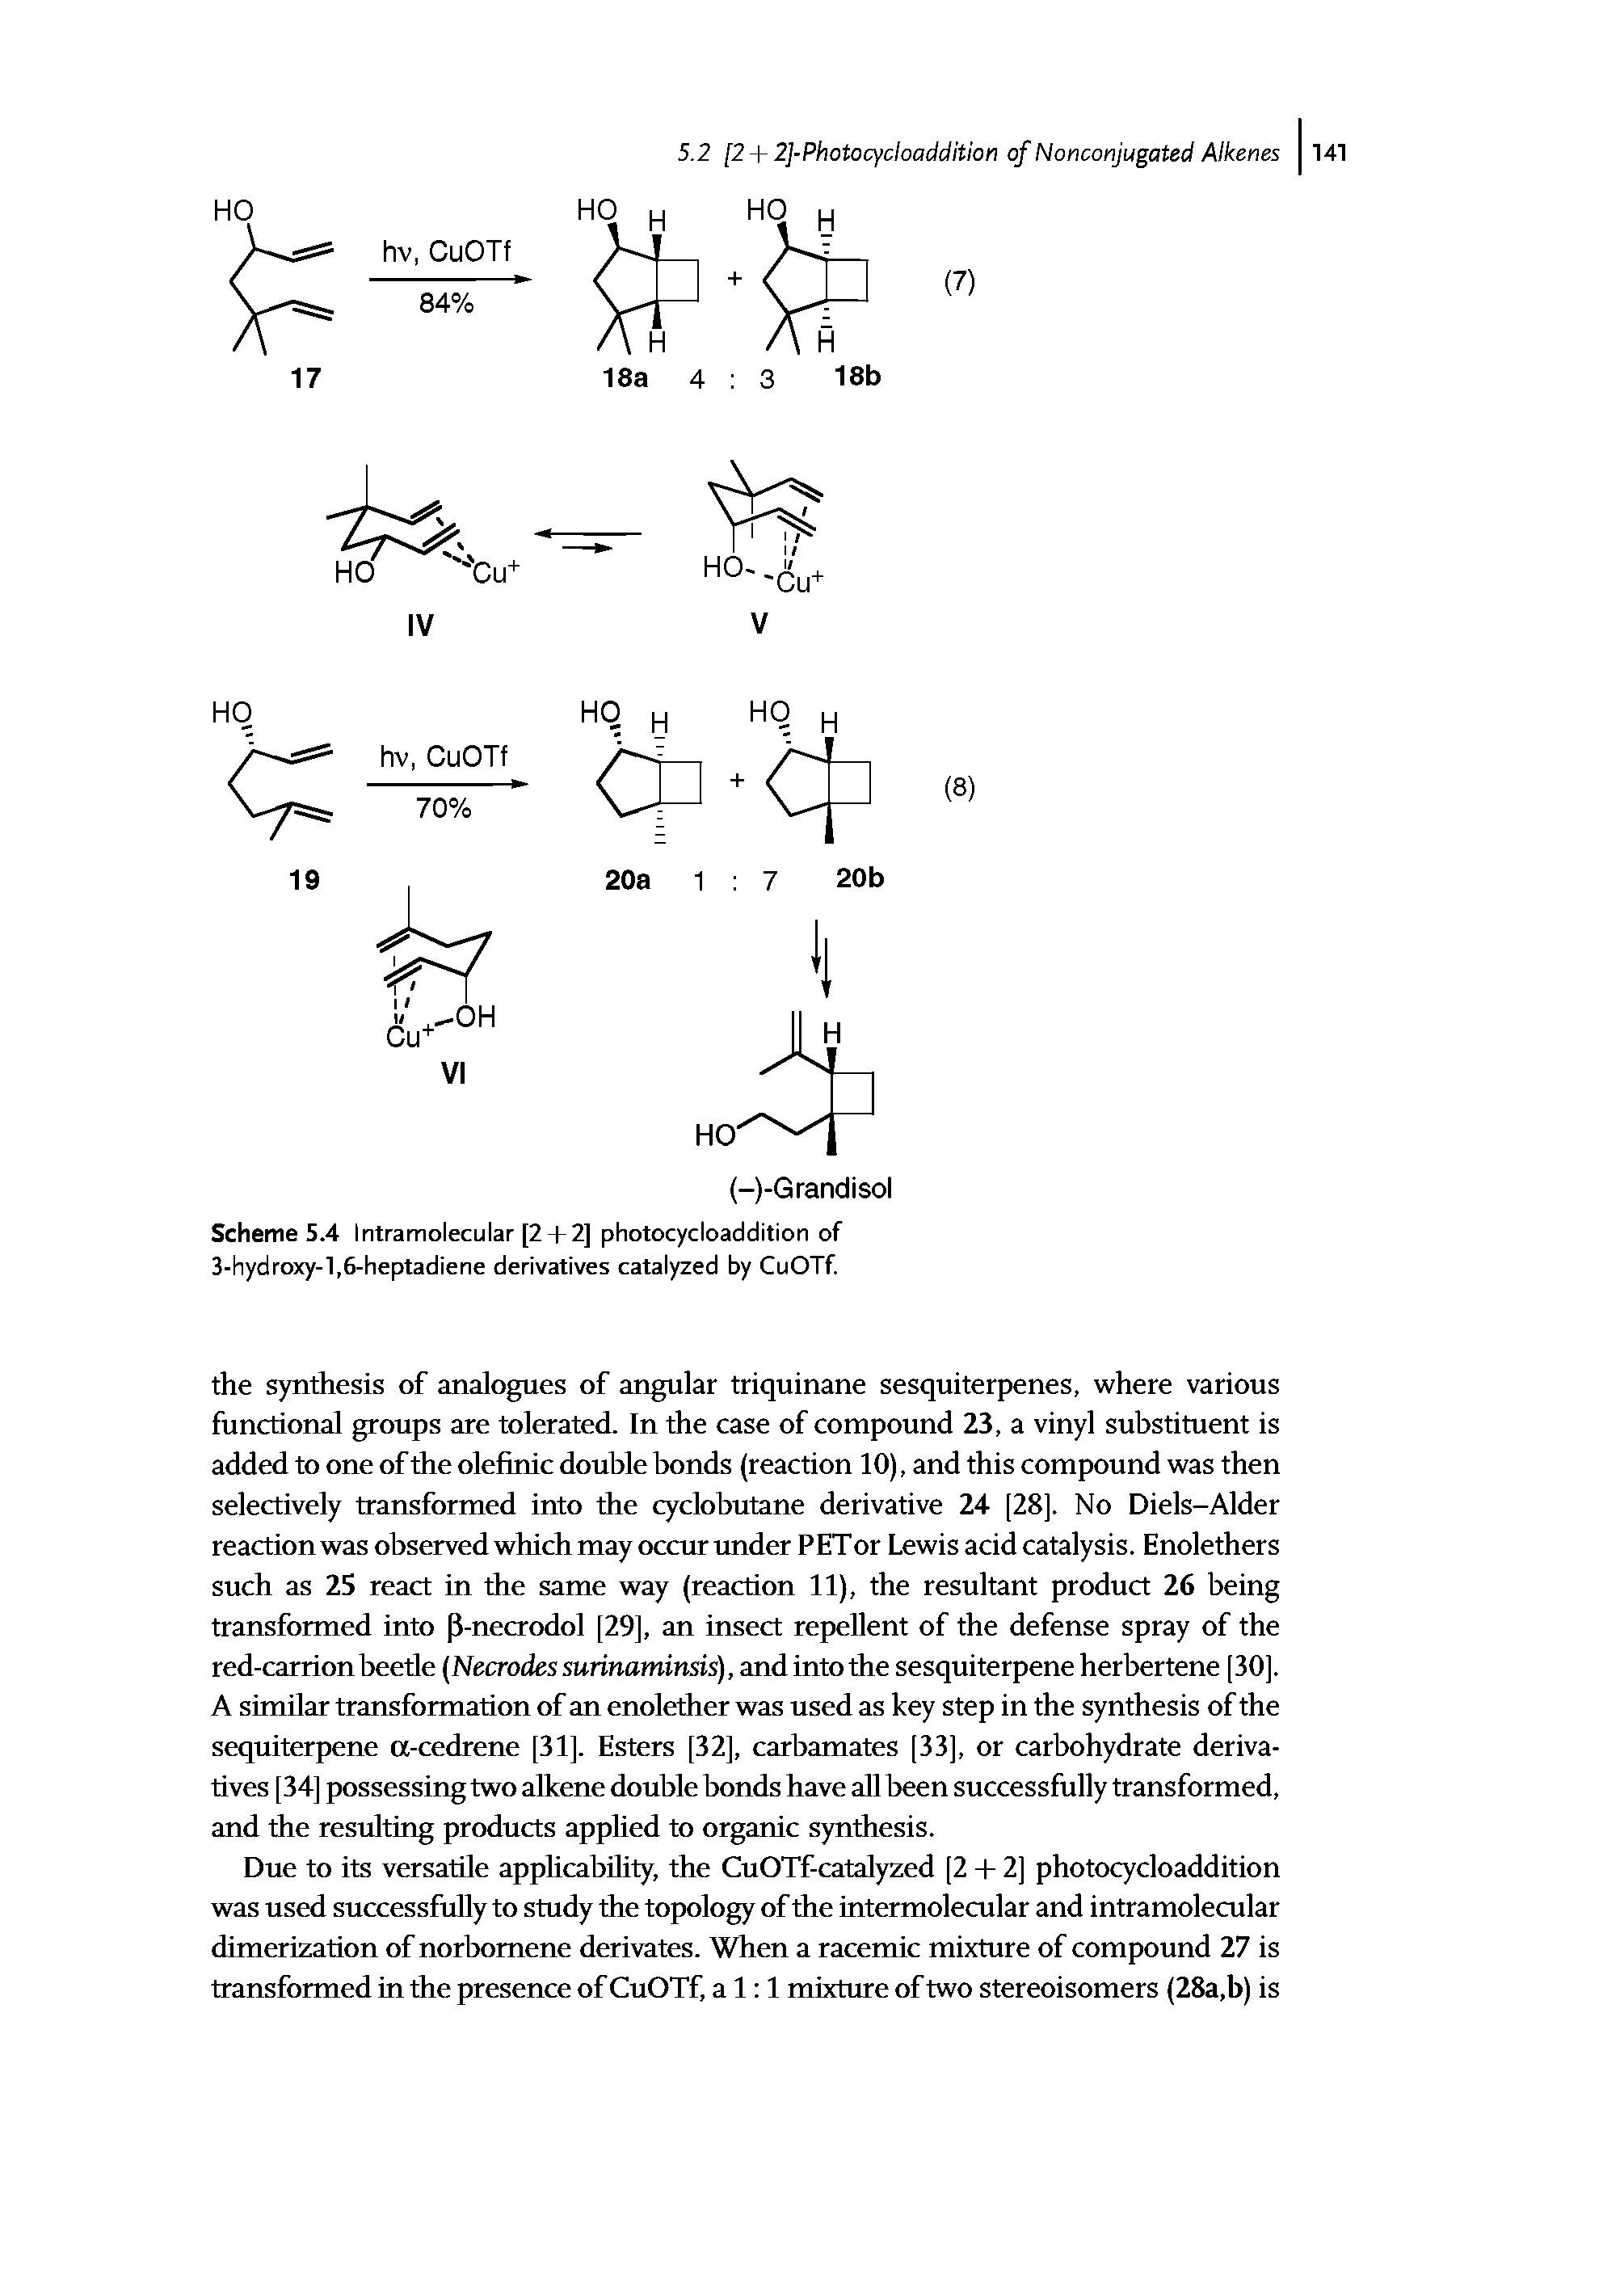 Scheme 5.4 Intramolecular [2 + 2] photocycloaddition of 3-hydroxy-l,6-heptadiene derivatives catalyzed by CuOTf.